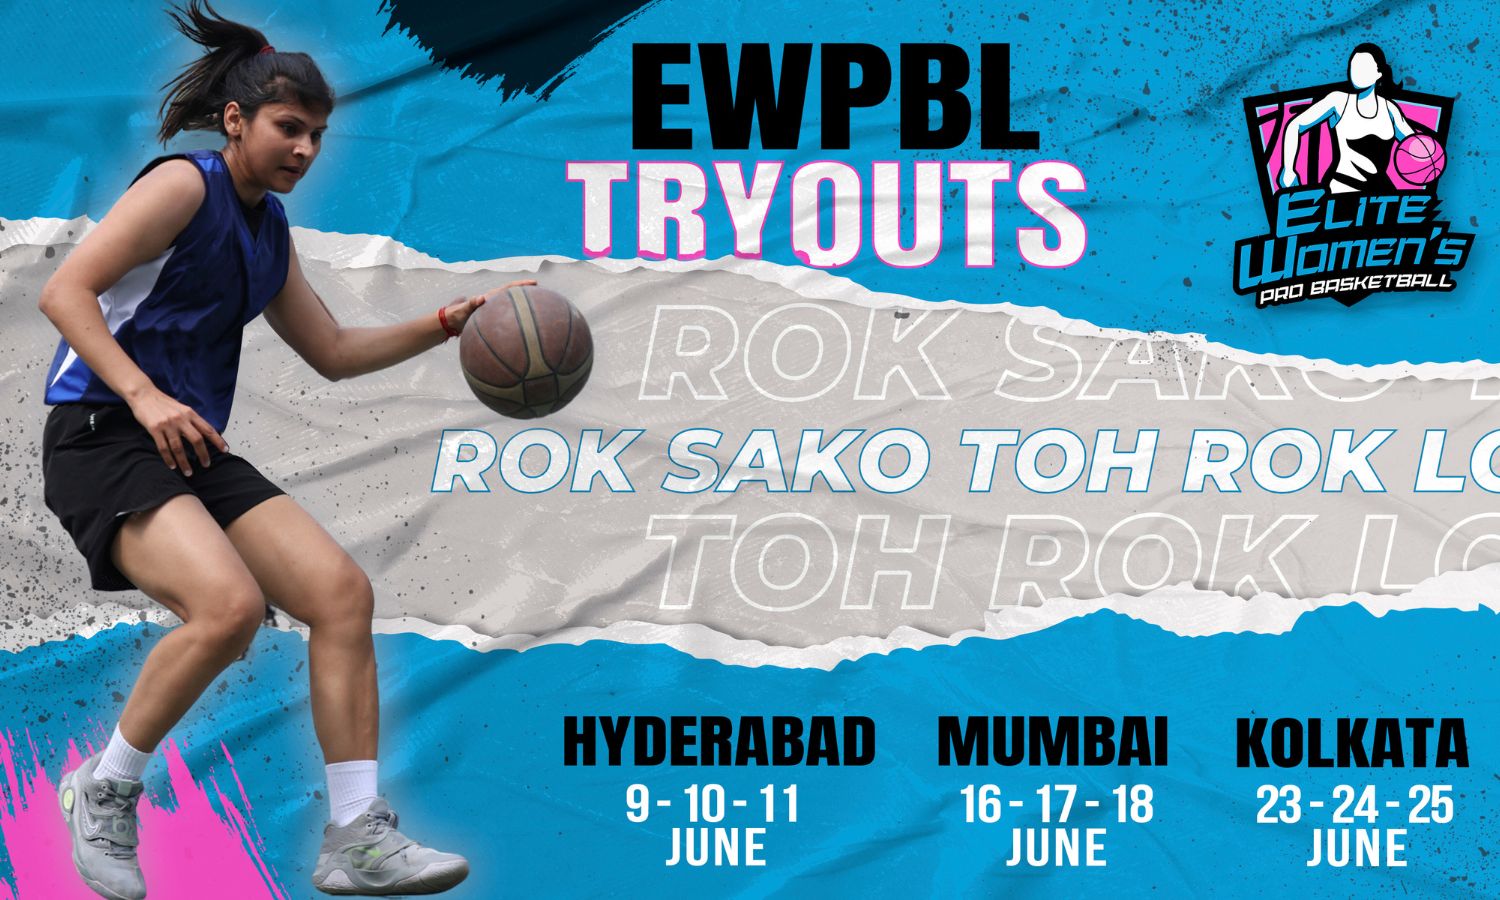 Hyderabad, Mumbai, Kolkata set to host Elite Women's pro Basketball